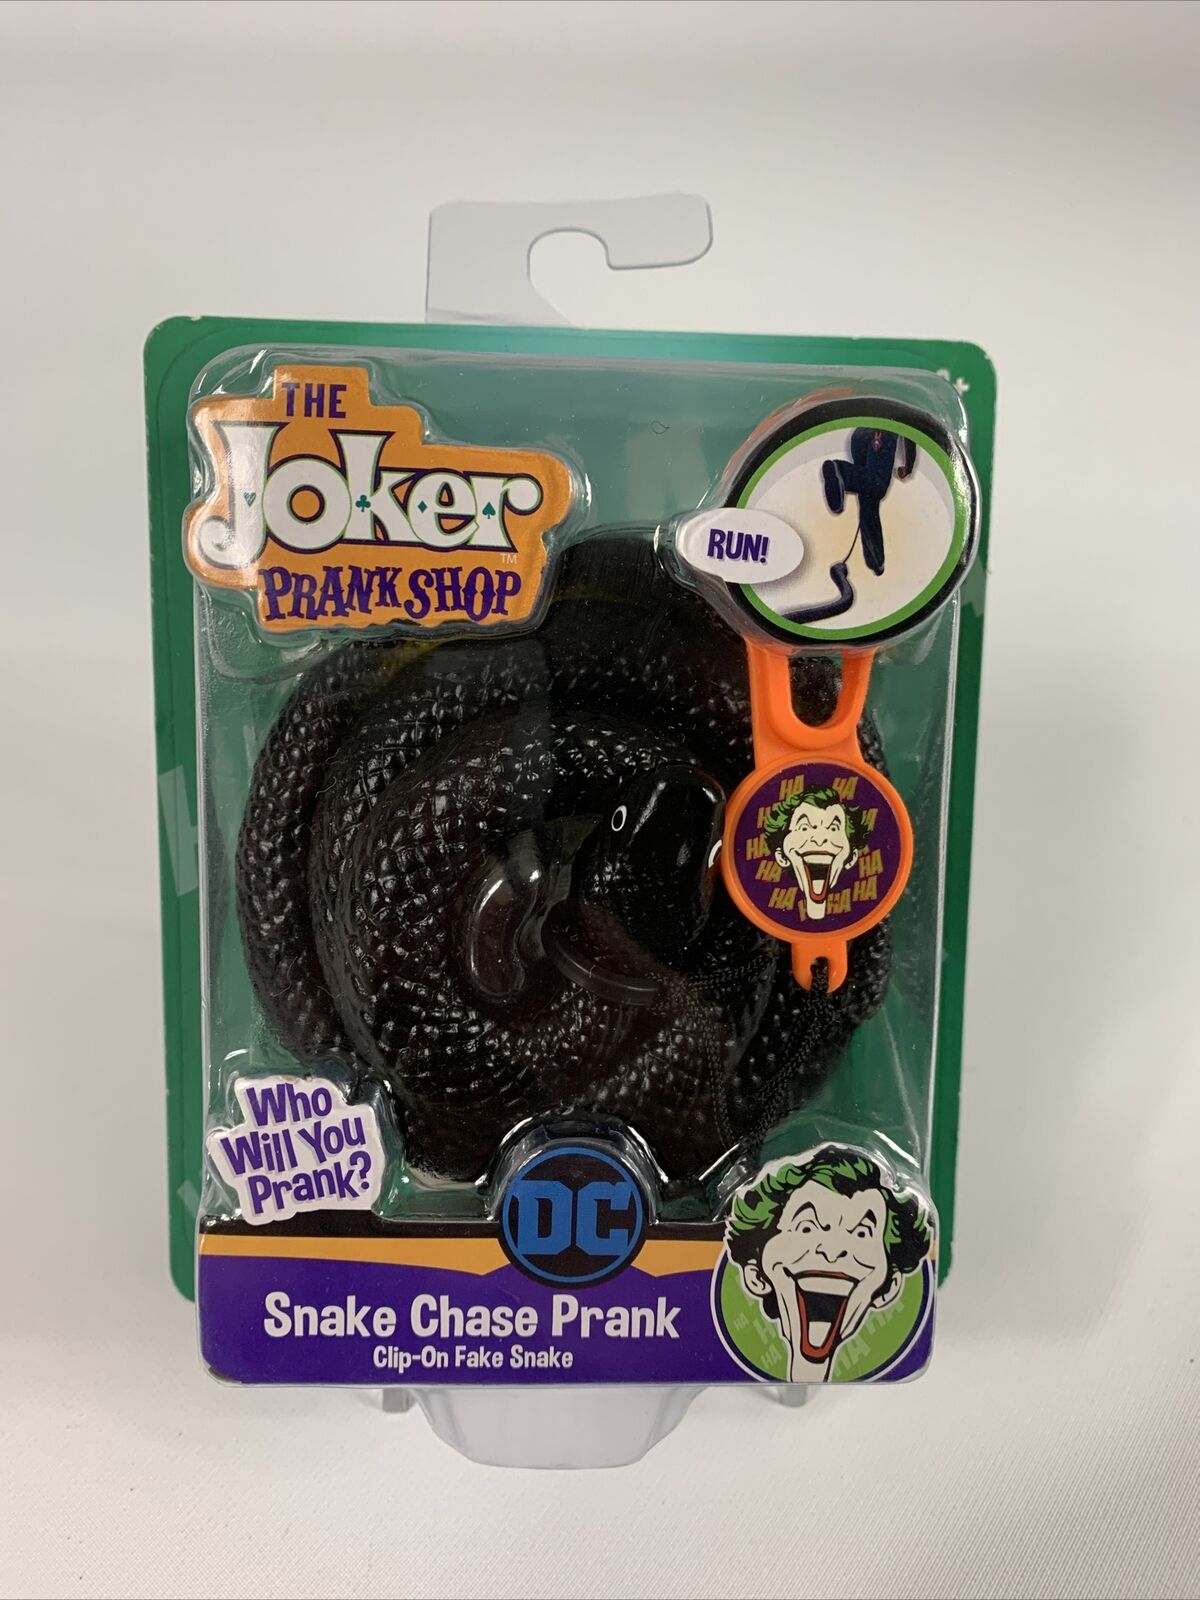 The Joker Prank Shop Snake Chase Prank Clip-On Fake Snake New Toy DC Batman